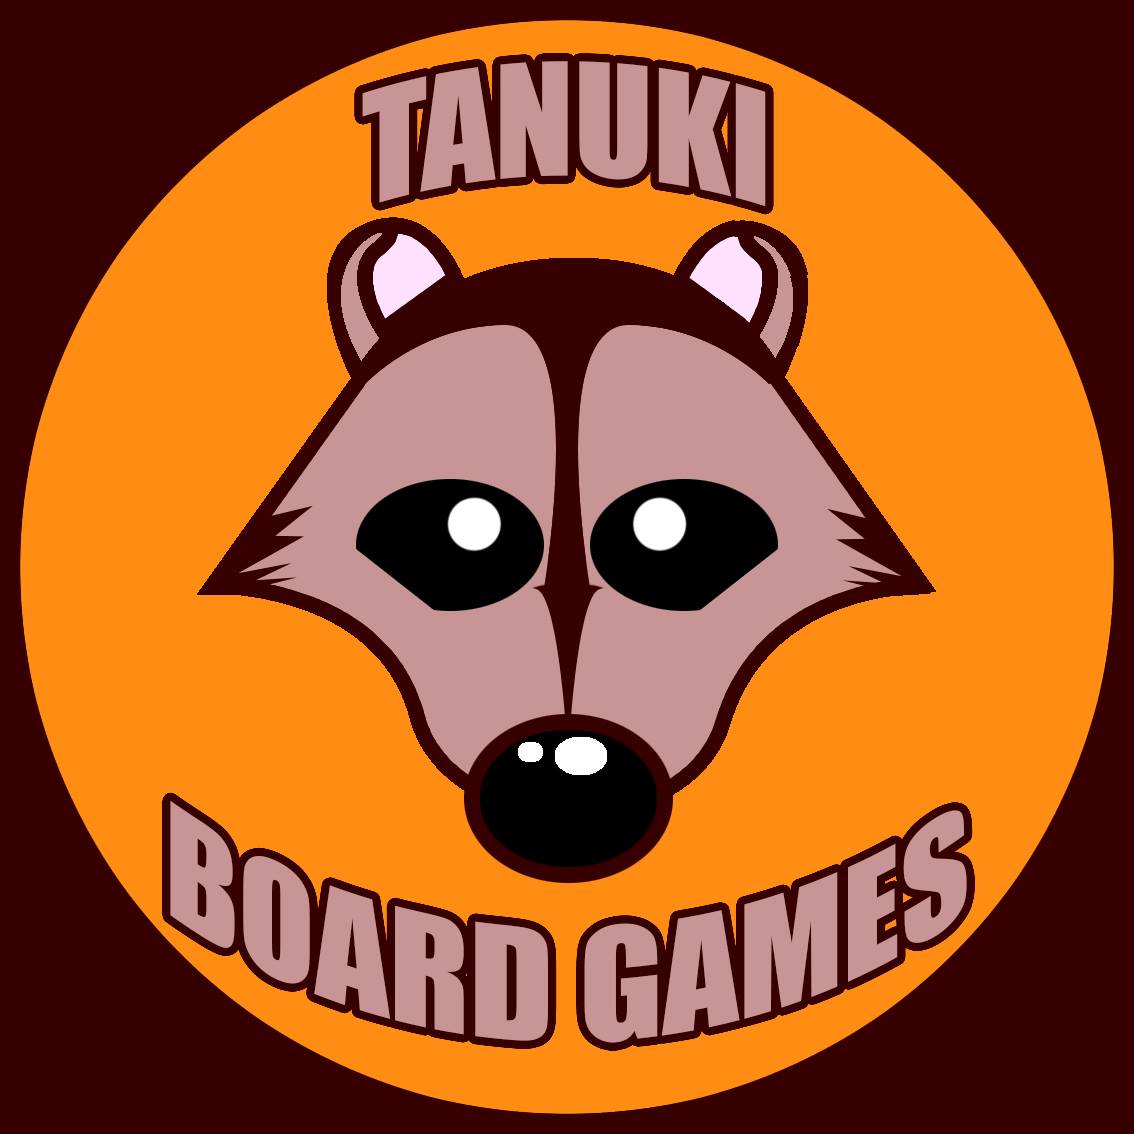 Marco Baglioni – Tanuki Boardgame